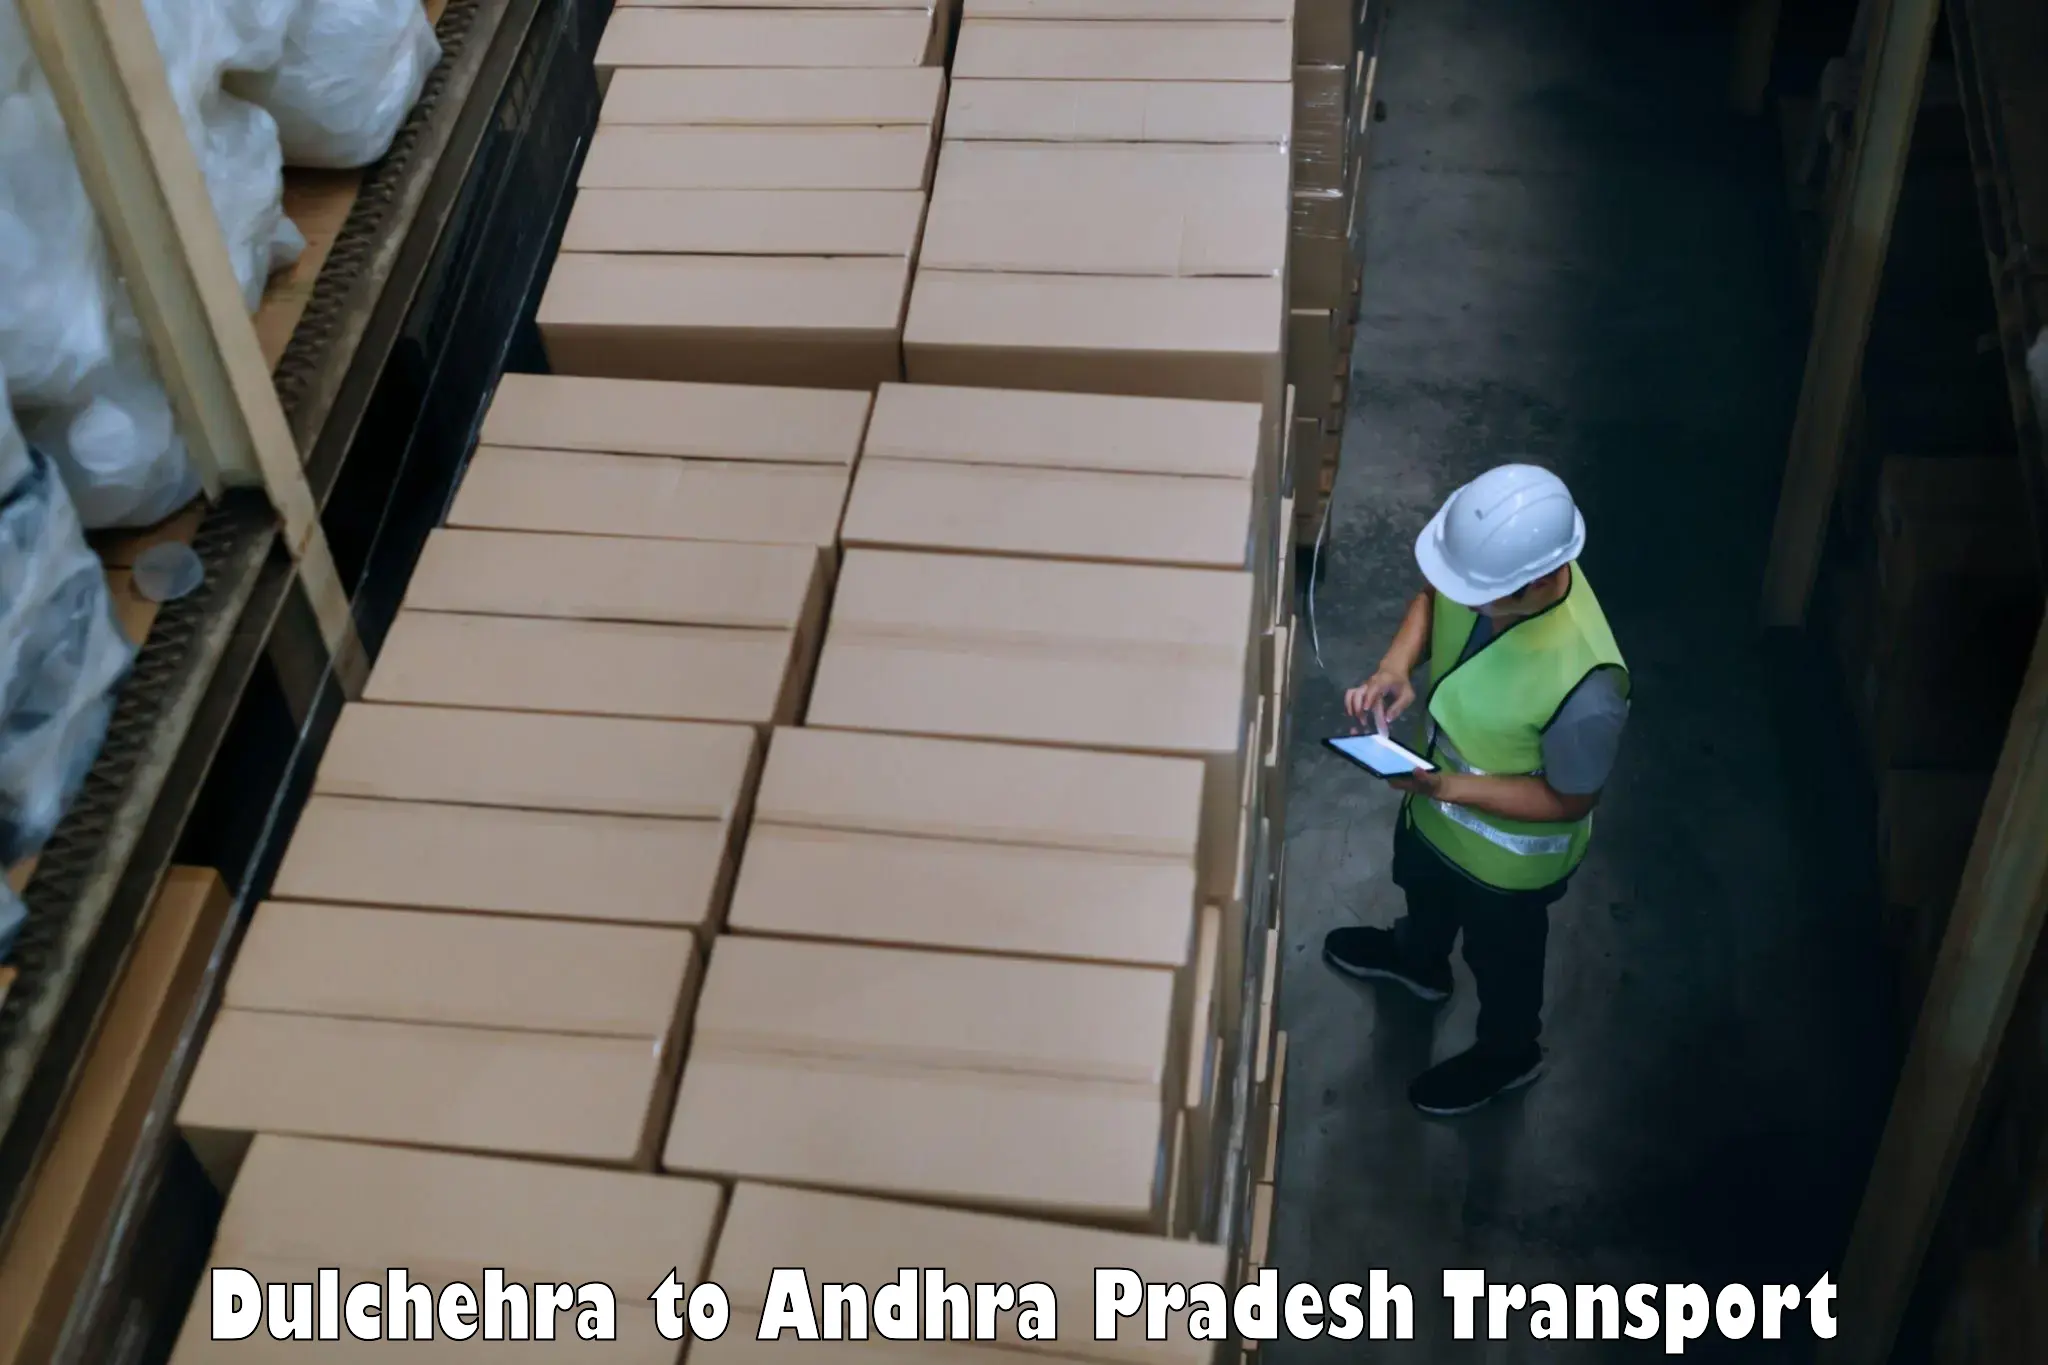 Truck transport companies in India Dulchehra to Kambadur